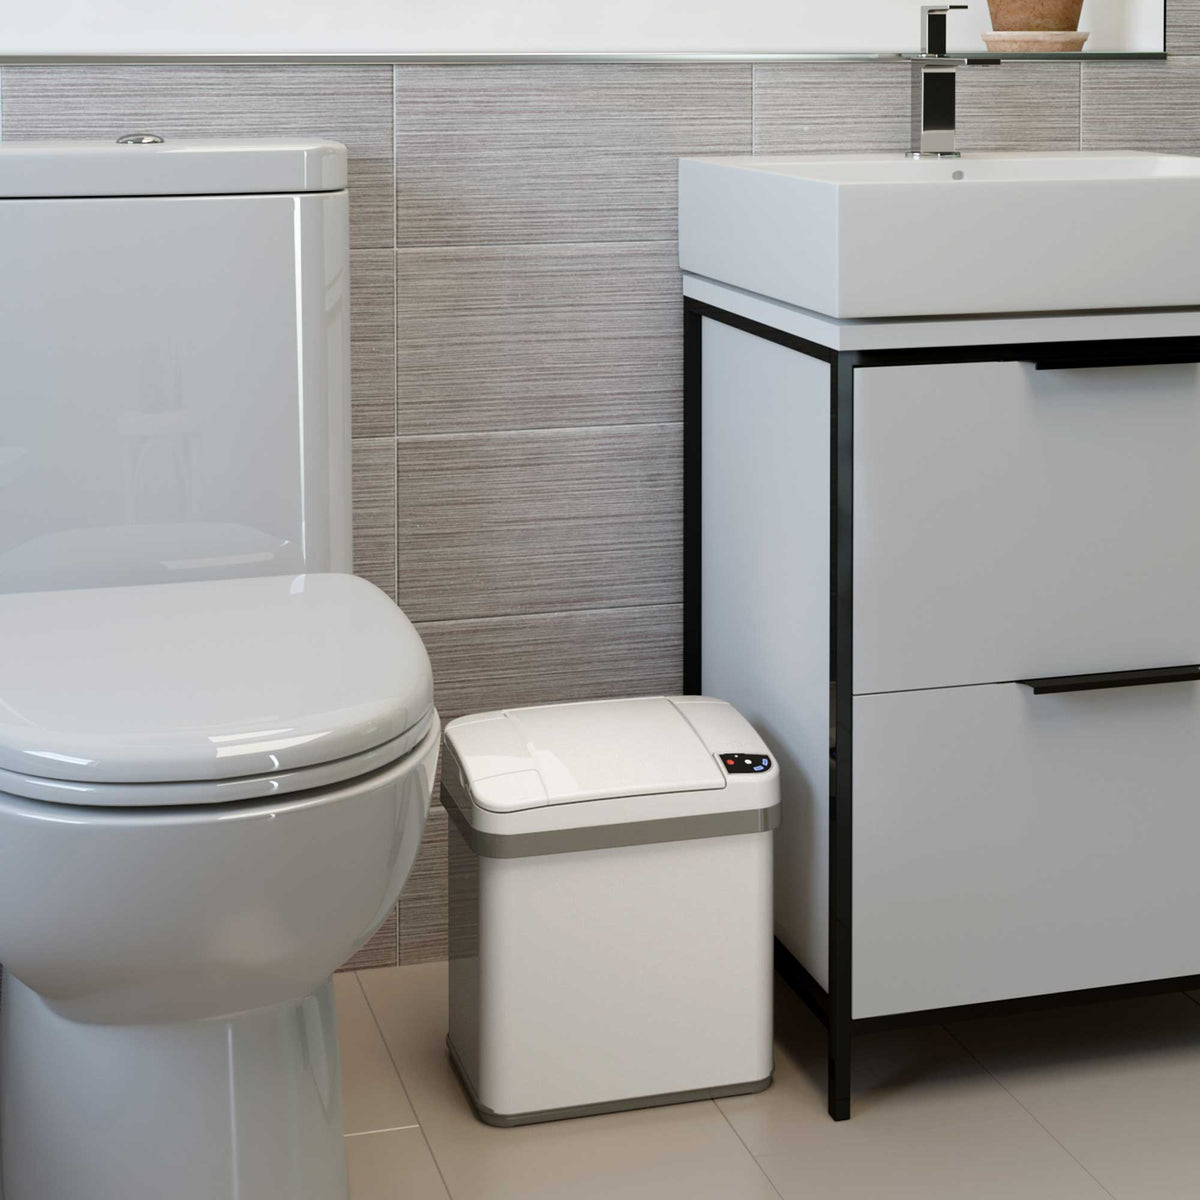 2.5 Gallon / 9.5 Liter White Sensor Bathroom Trash Can with Odor Filter and Lemon Fragrance in bathroom